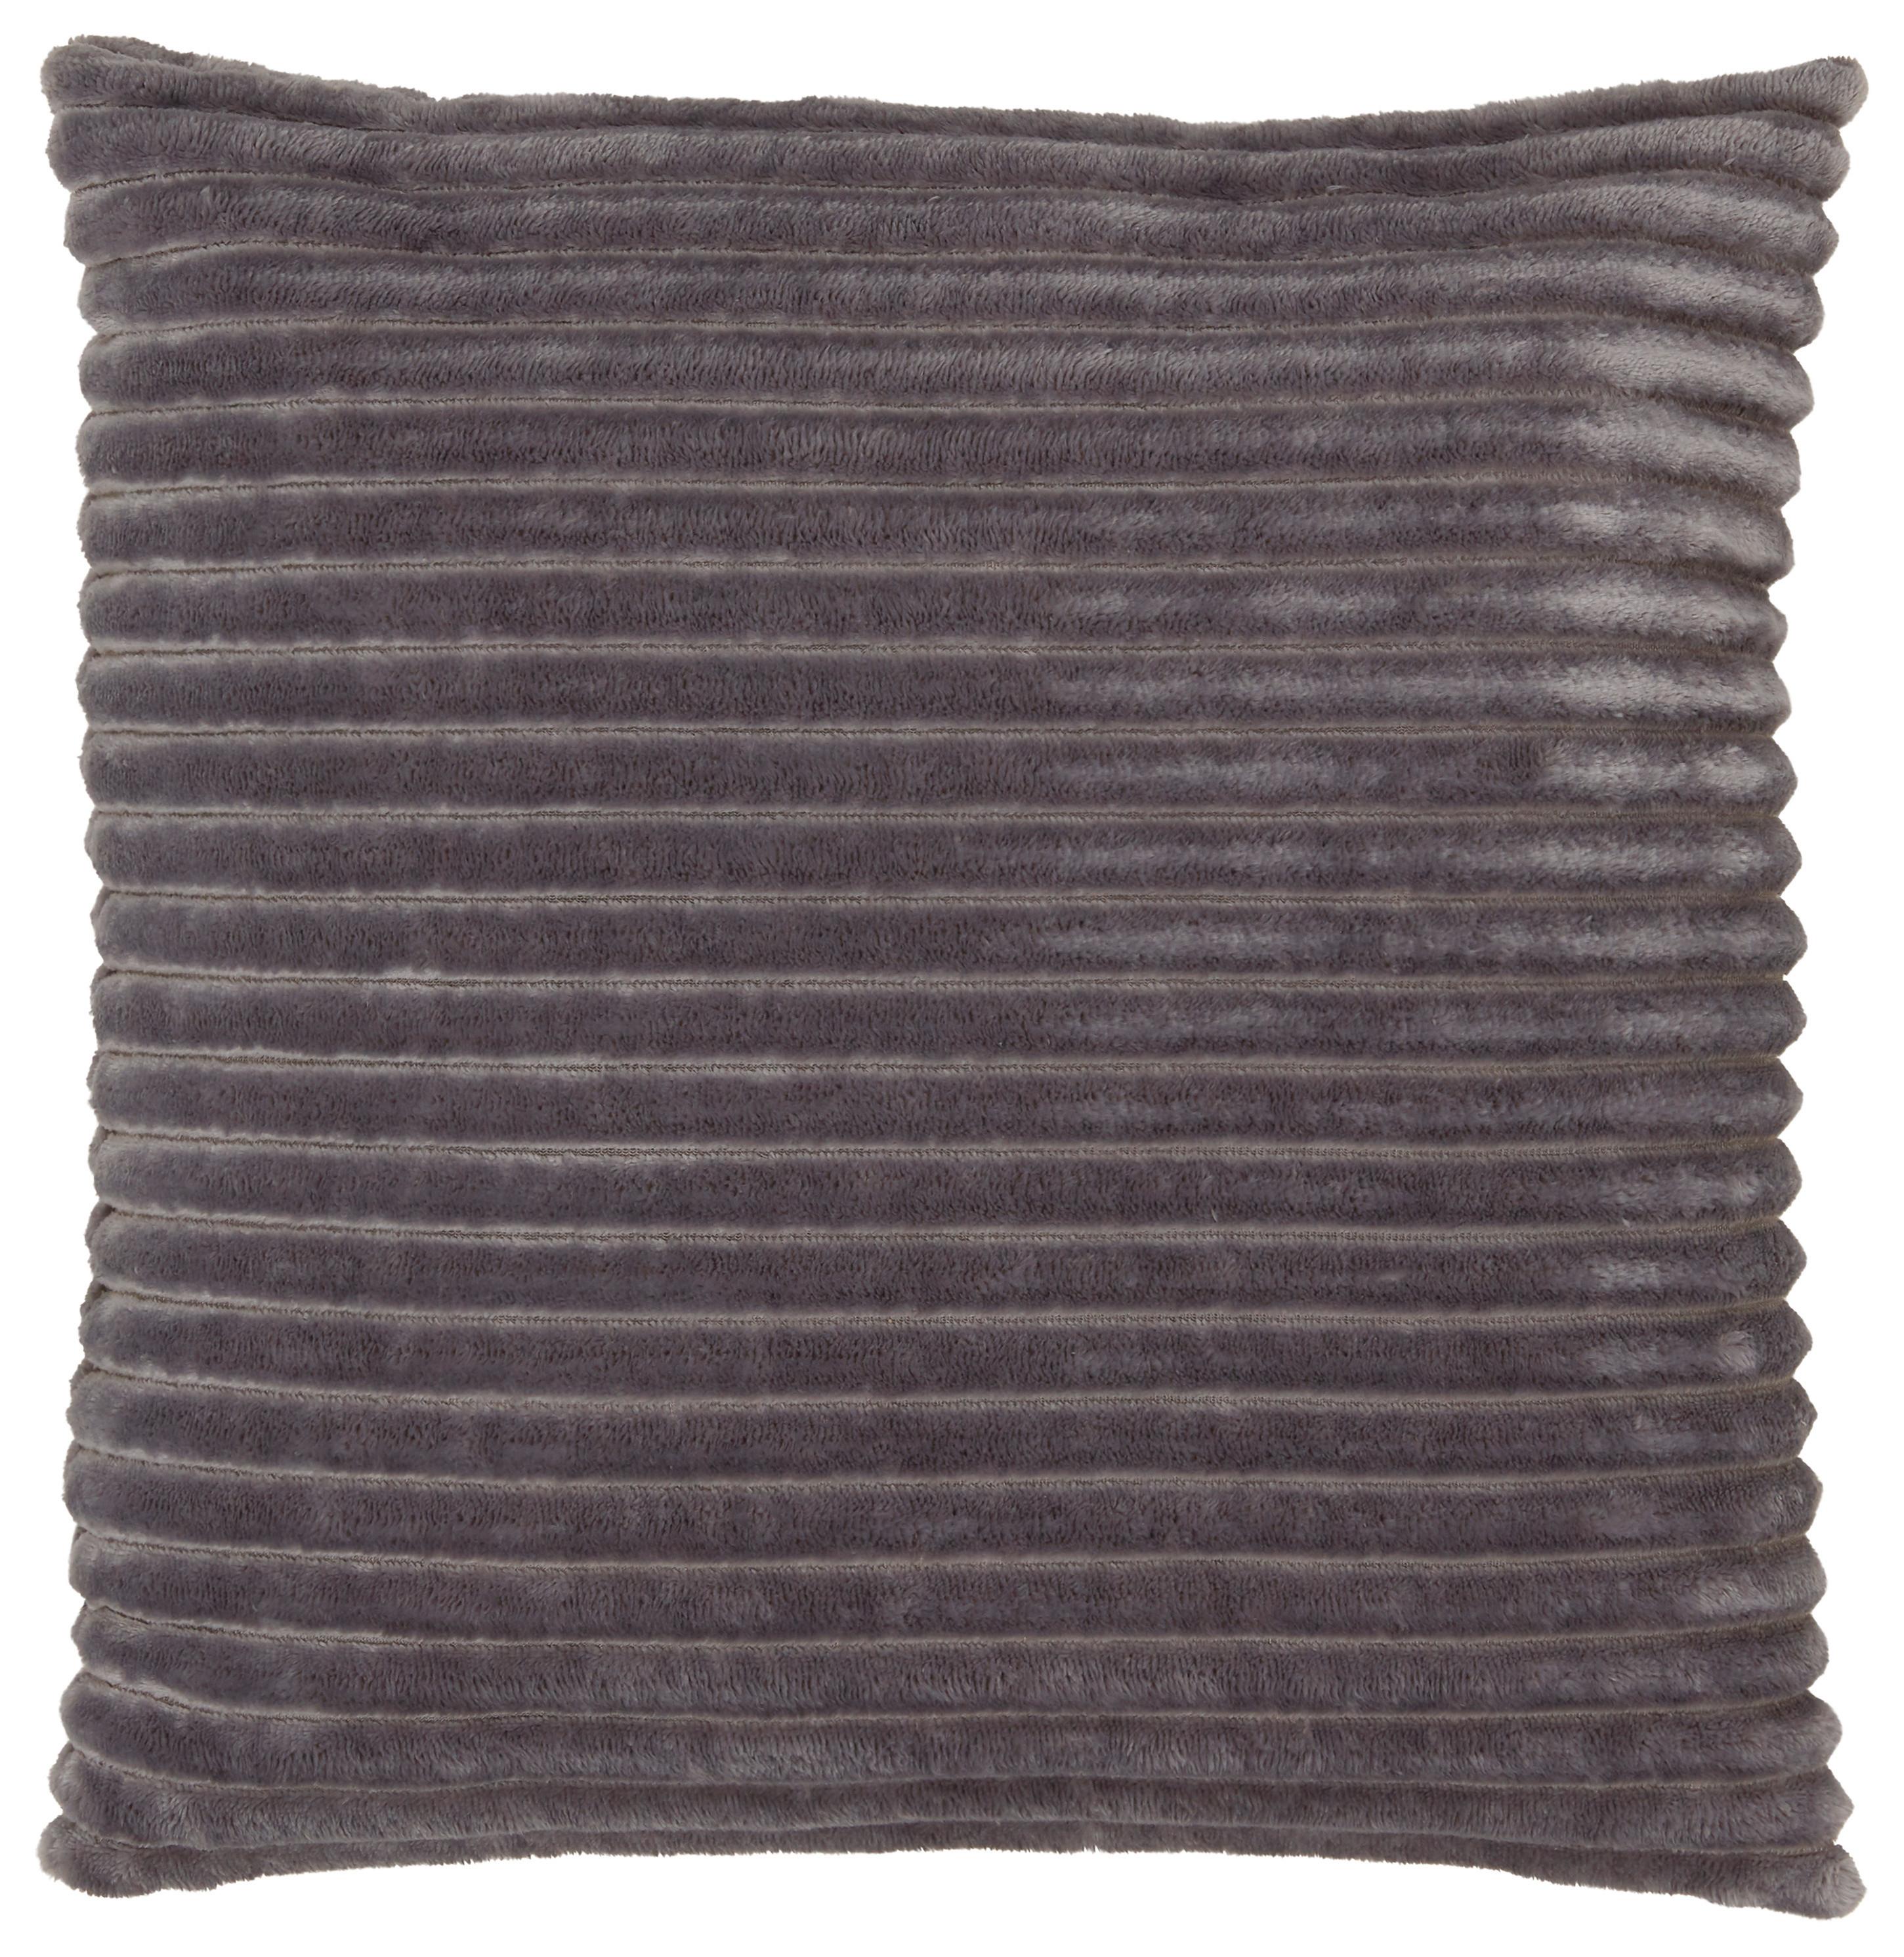 Zierkissen Cordi in Grau ca. 45x45cm - Grau, KONVENTIONELL, Textil (45/45cm) - Modern Living